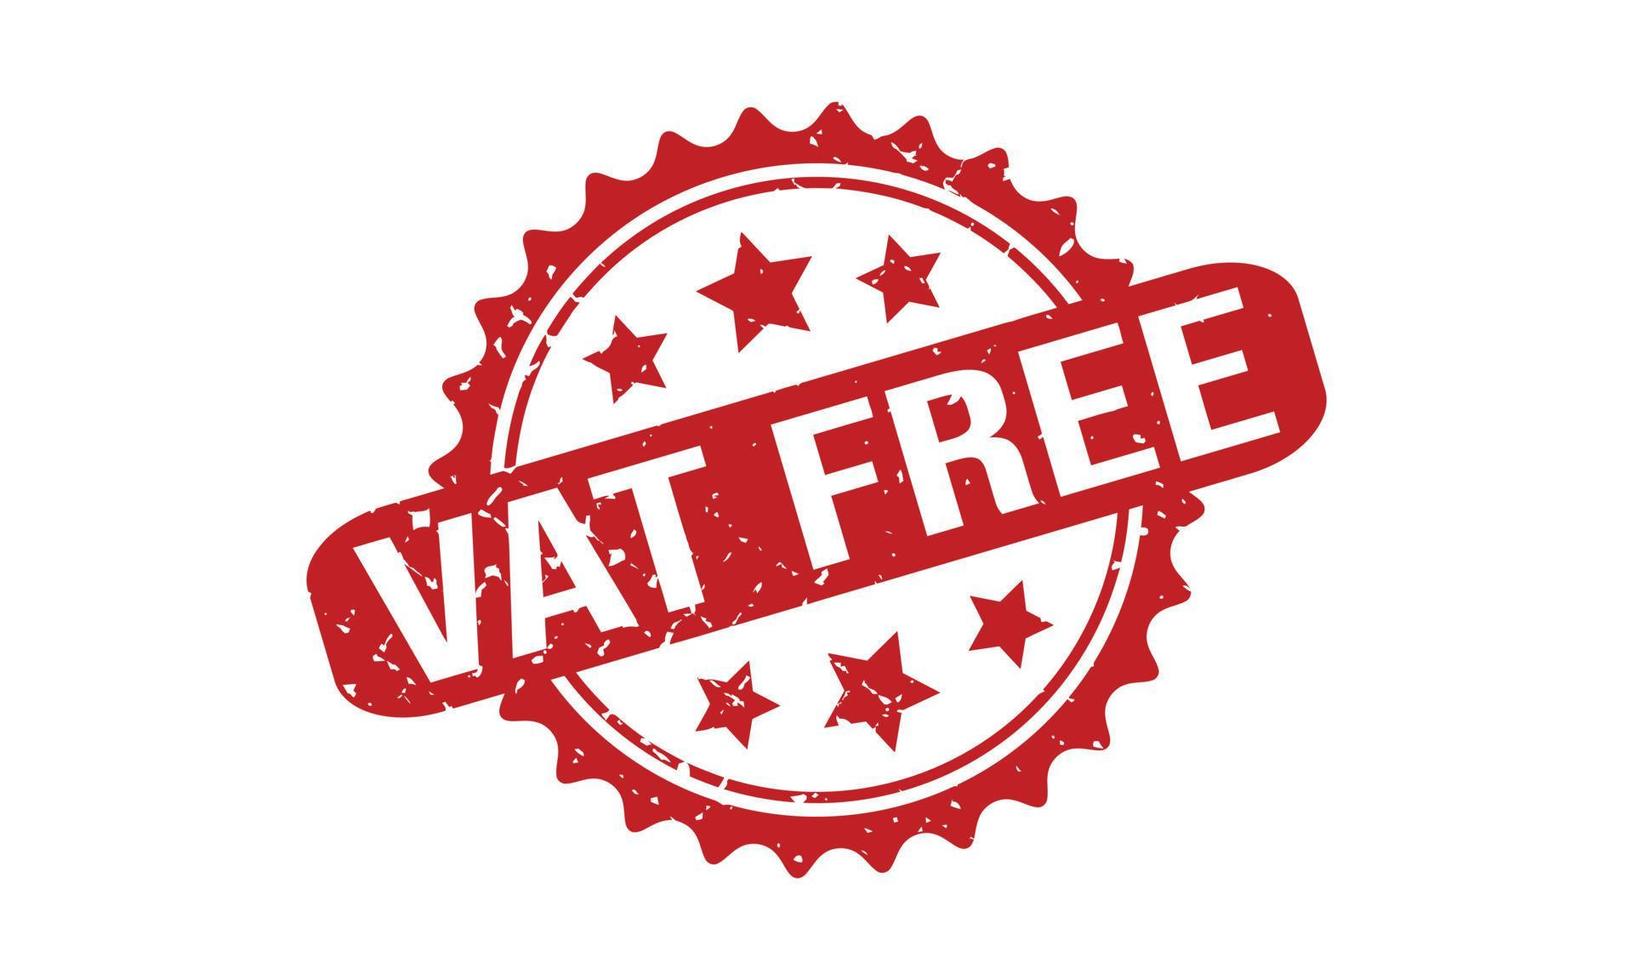 IVA gratis caucho grunge sello sello vector ilustración